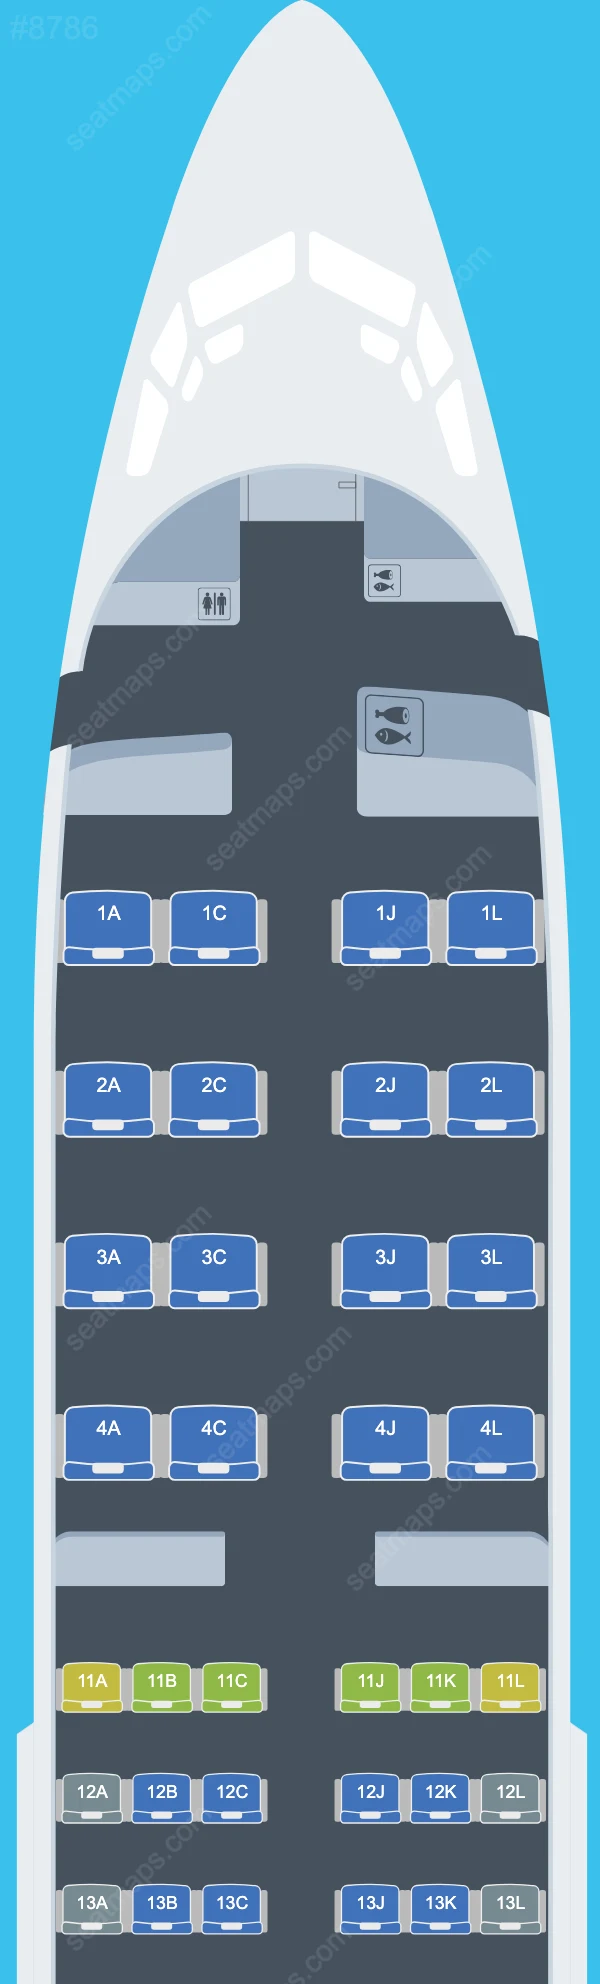 ASKY Airlines Boeing 737 Plan de Salle 737-700